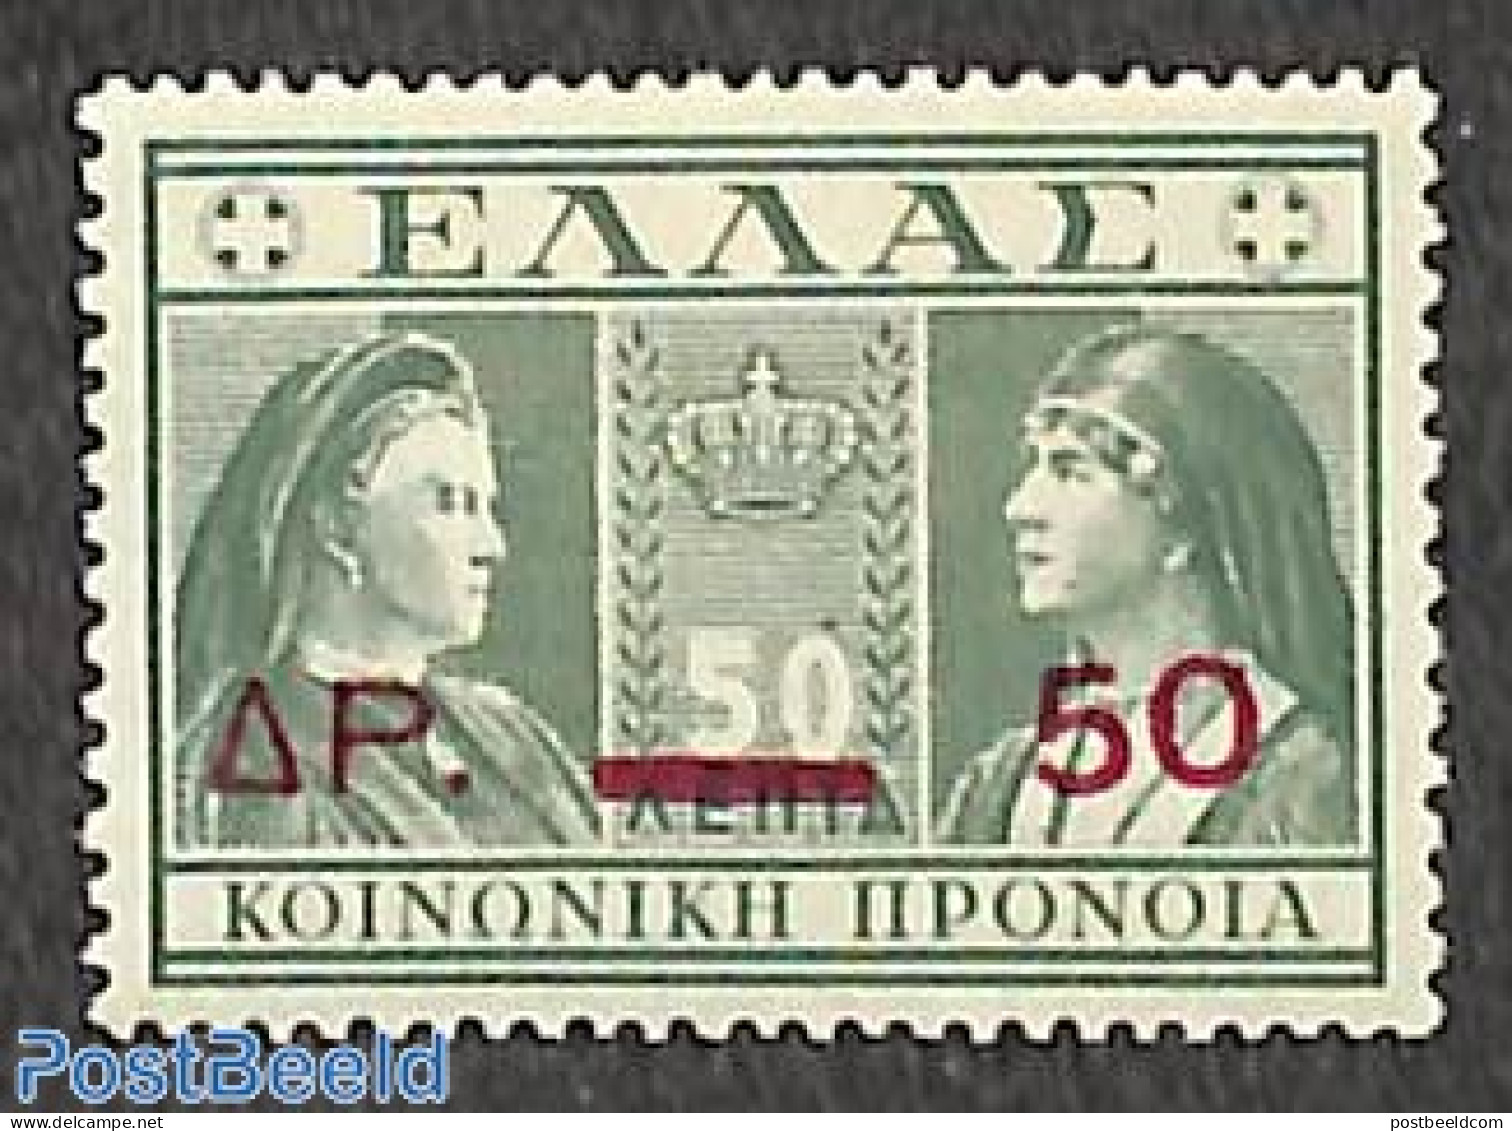 Greece 1947 Welfare Stamp 50Dr On 50L 1v, Mint NH - Ungebraucht